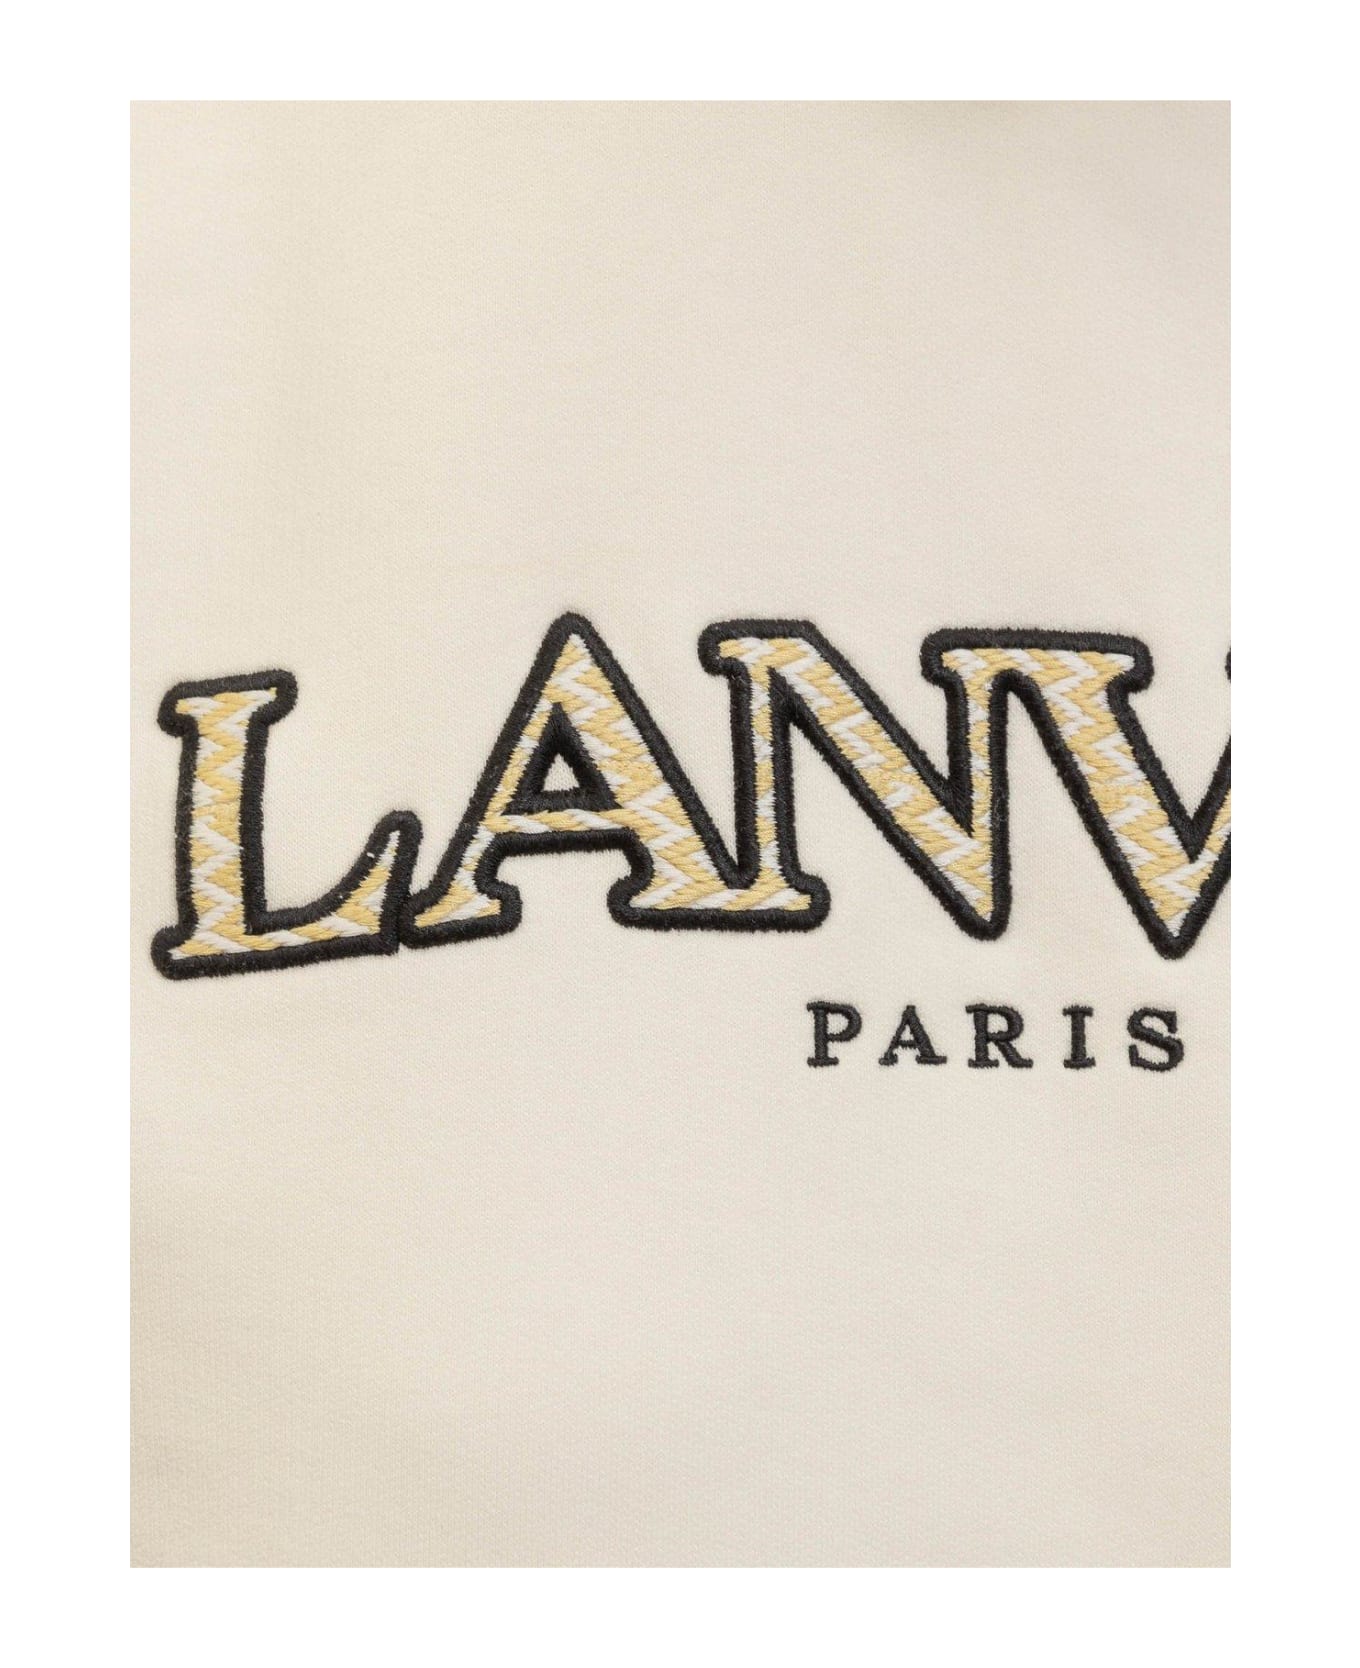 Lanvin Logo Embroidered Drawstring Hoodie - White フリース